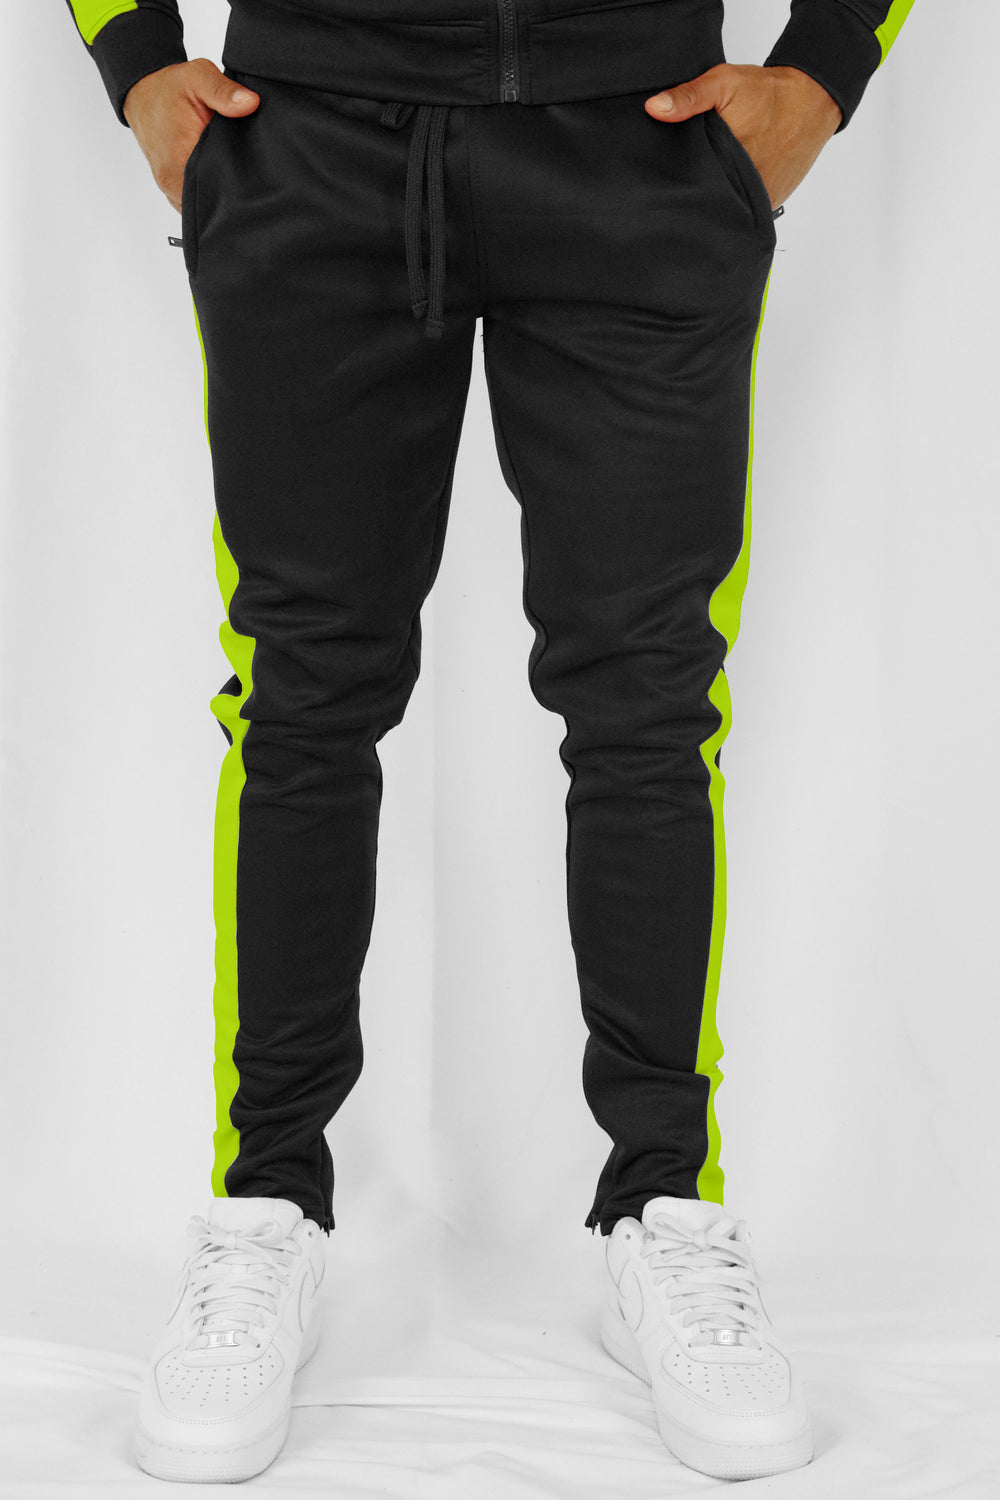 Outside Solid One Stripe Track Pants (Black - Lime) (100-402) - Zamage